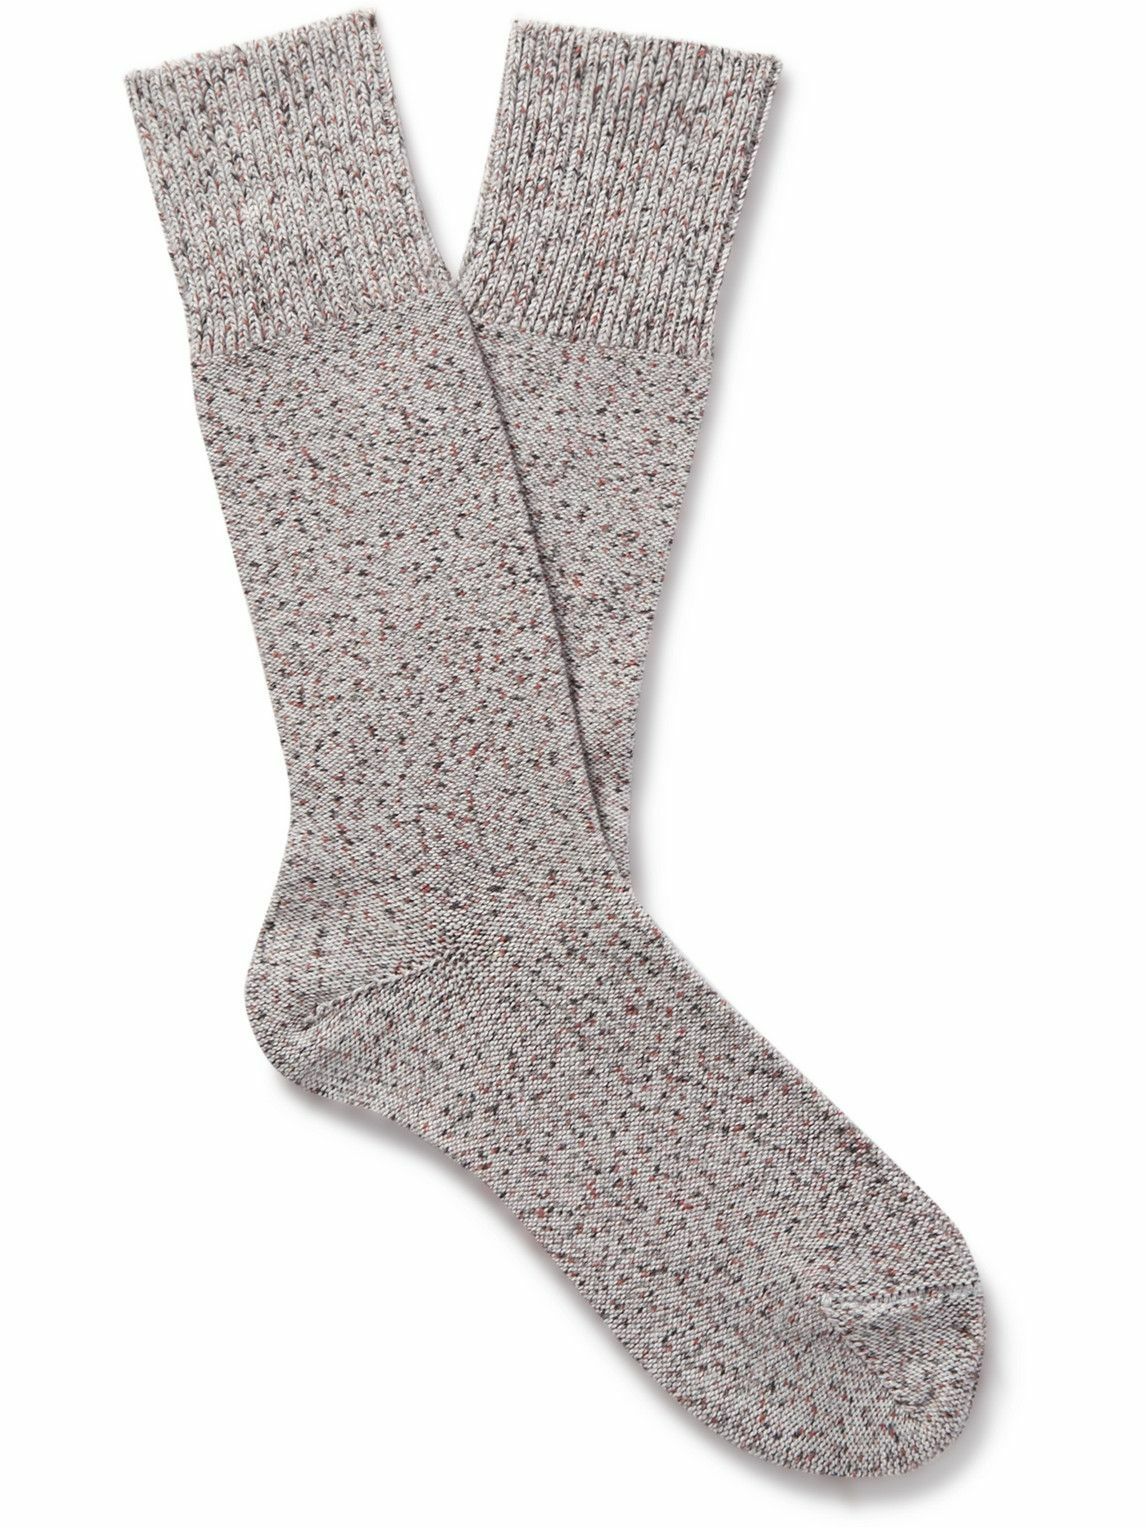 Falke - Rain-Dye Cotton-Blend Socks - Neutrals FALKE Ergonomic Sport System